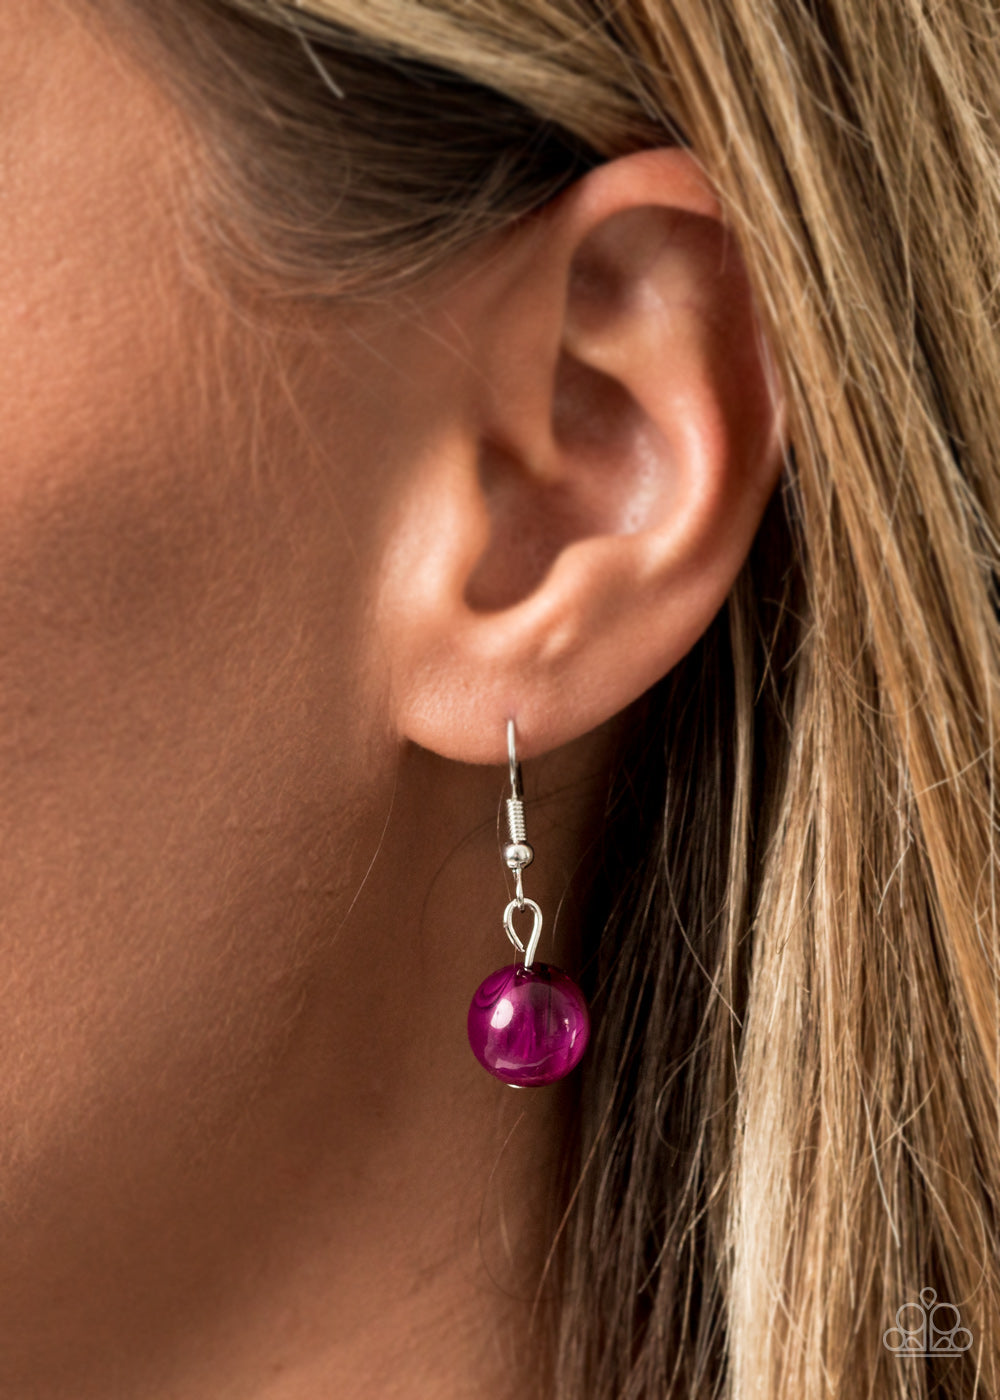 Bead Necklace - Paparazzi Sorry To Burst Your Bubble - Purple Necklace  Paparazzi jewelry image